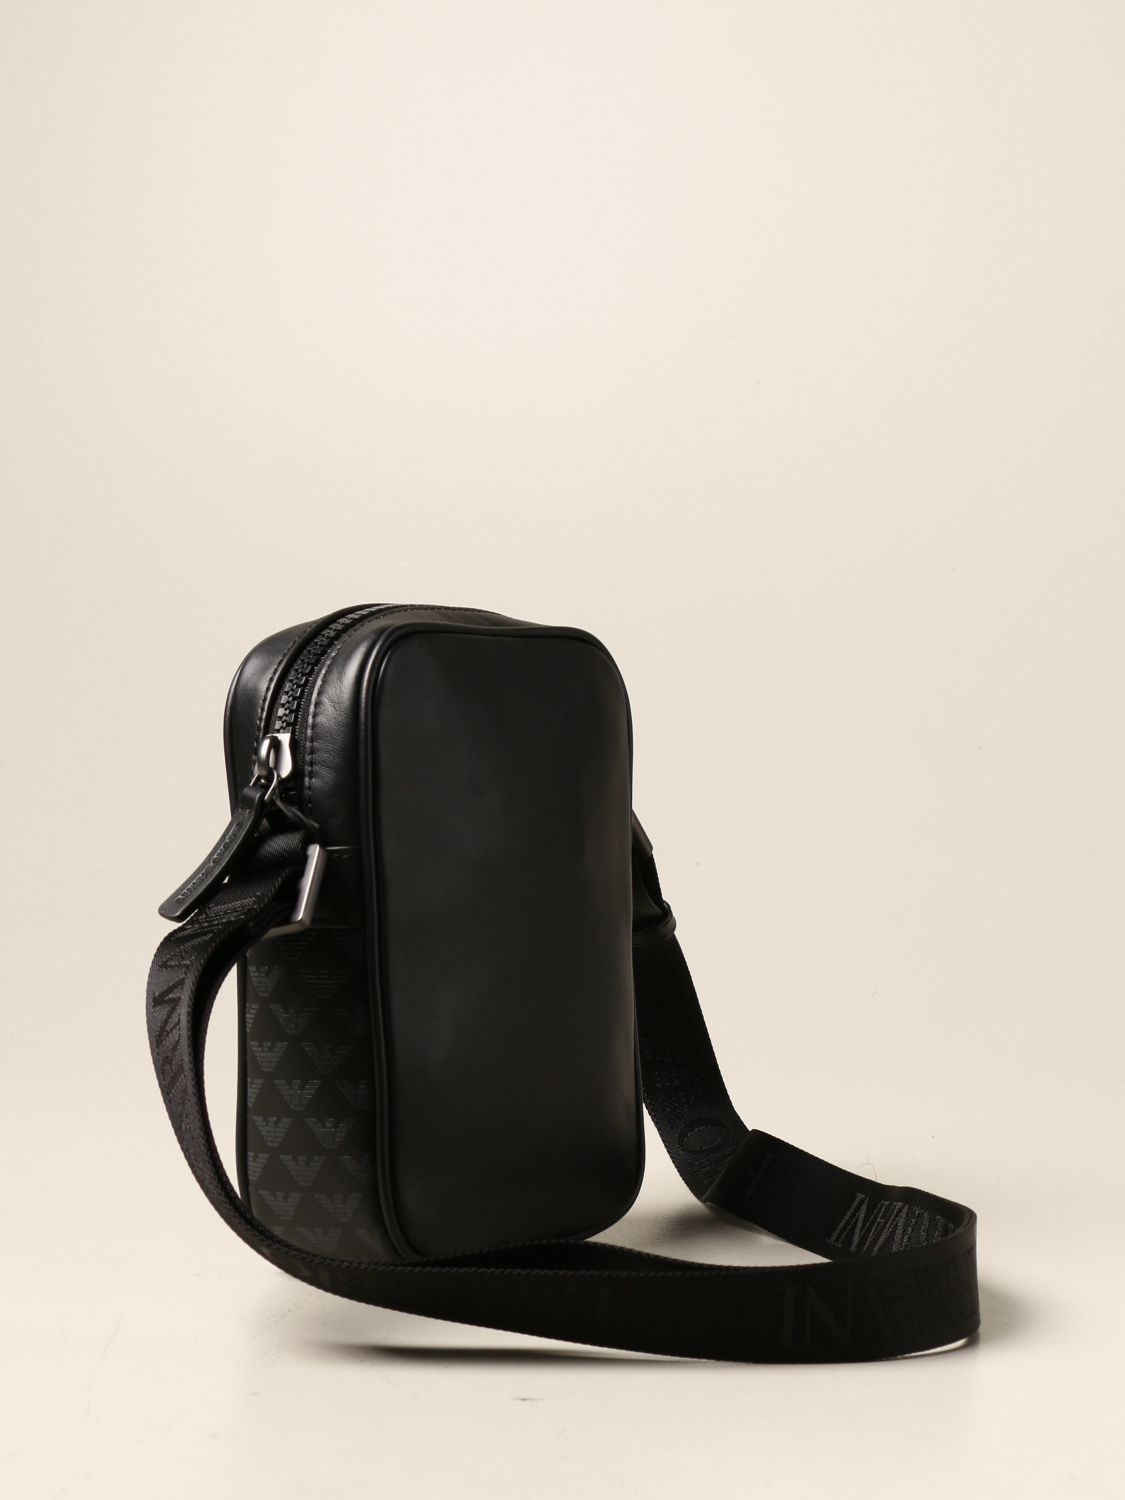 Emporio Armani Women's Leather Shoulder Bag - Black - Shoulder Bags